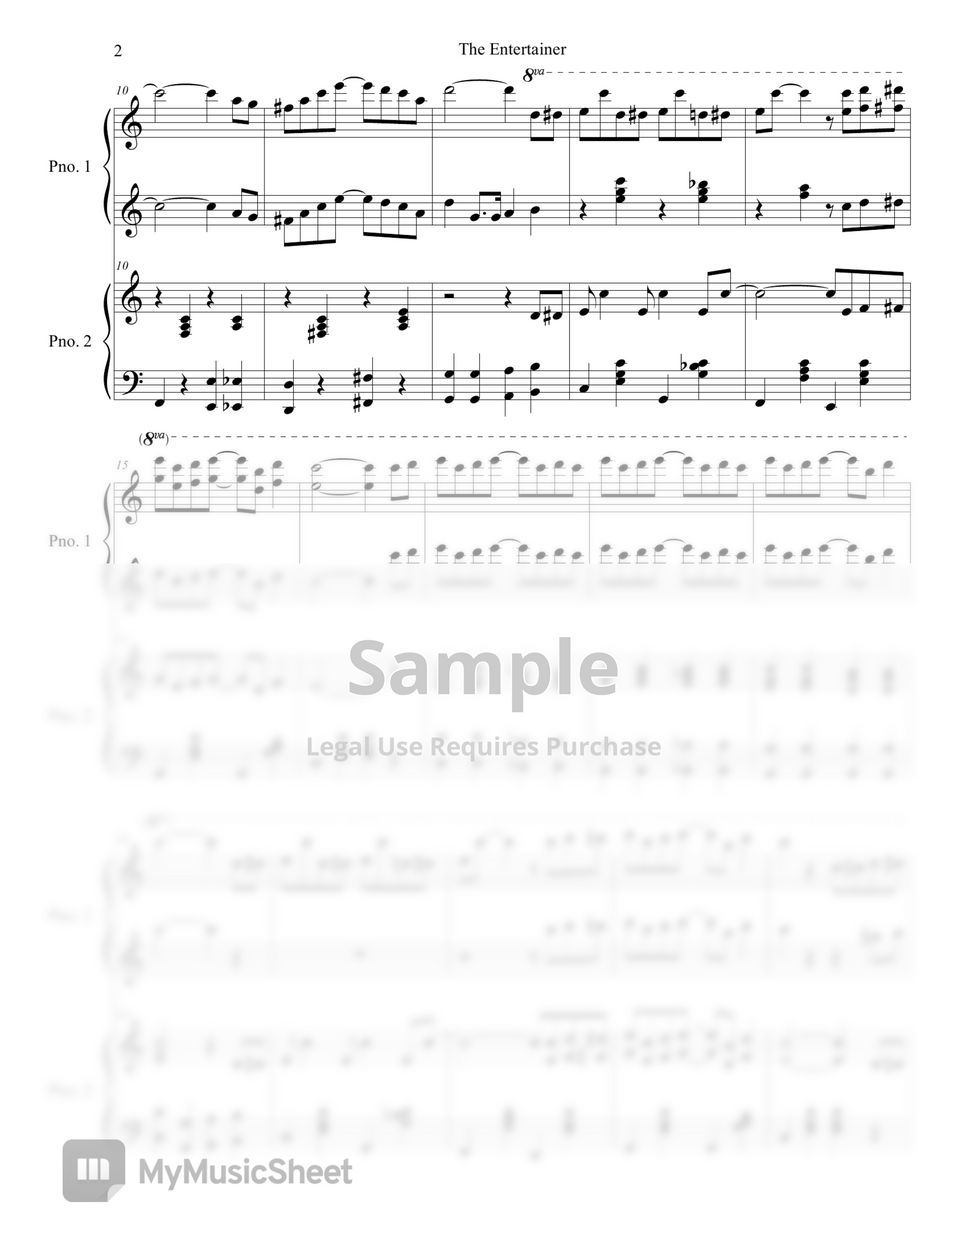 Scott Joplin - The Entertainer (1piano4hands) by Lisamusic